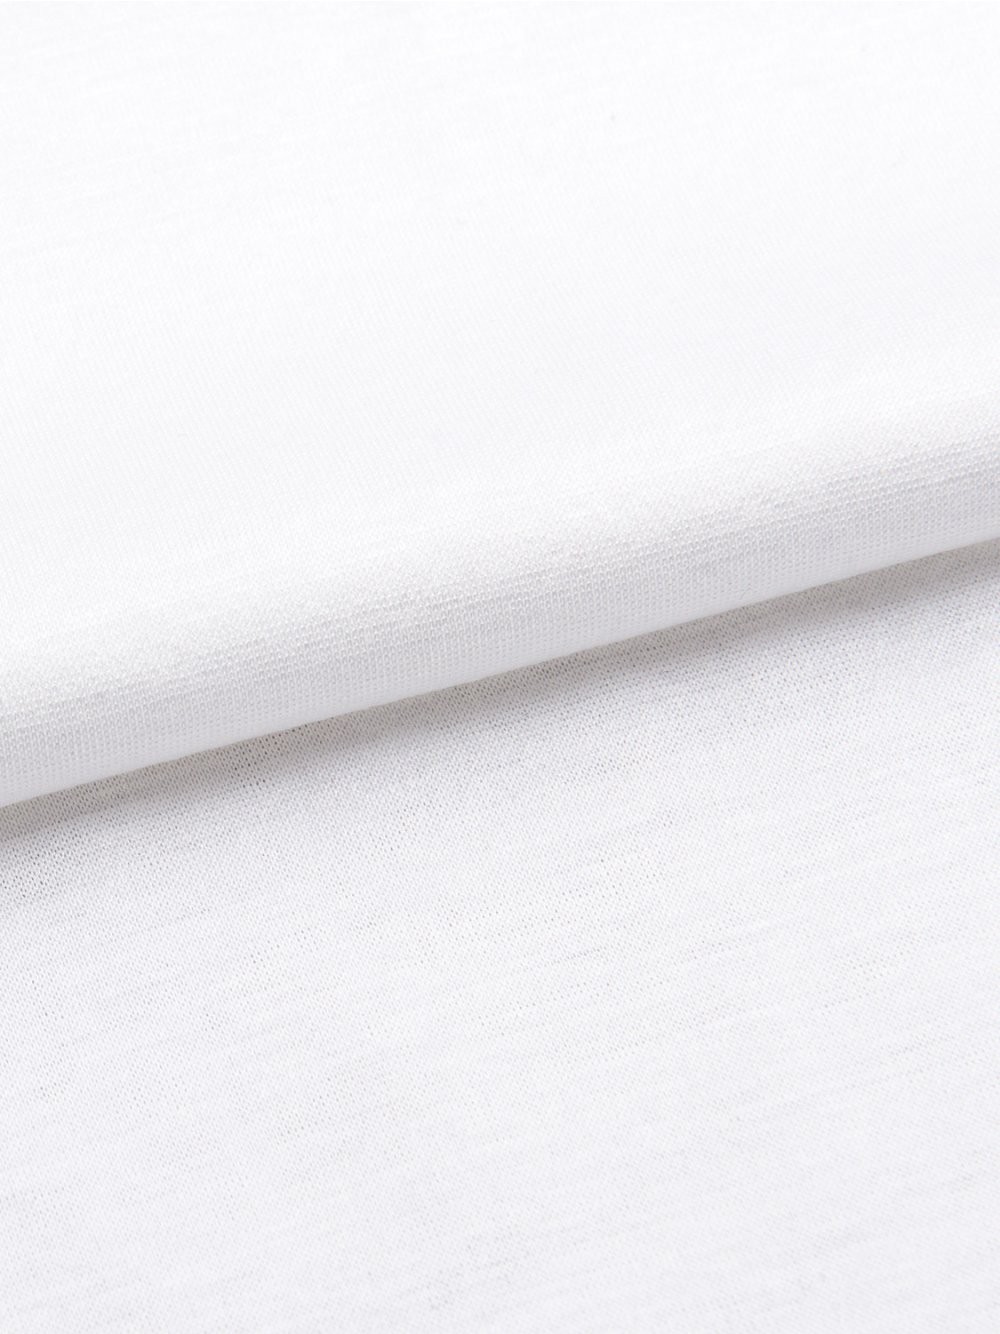 mens_underwear_v_neck_t_shirt_alex_micro_modal_stretch_white_fabric